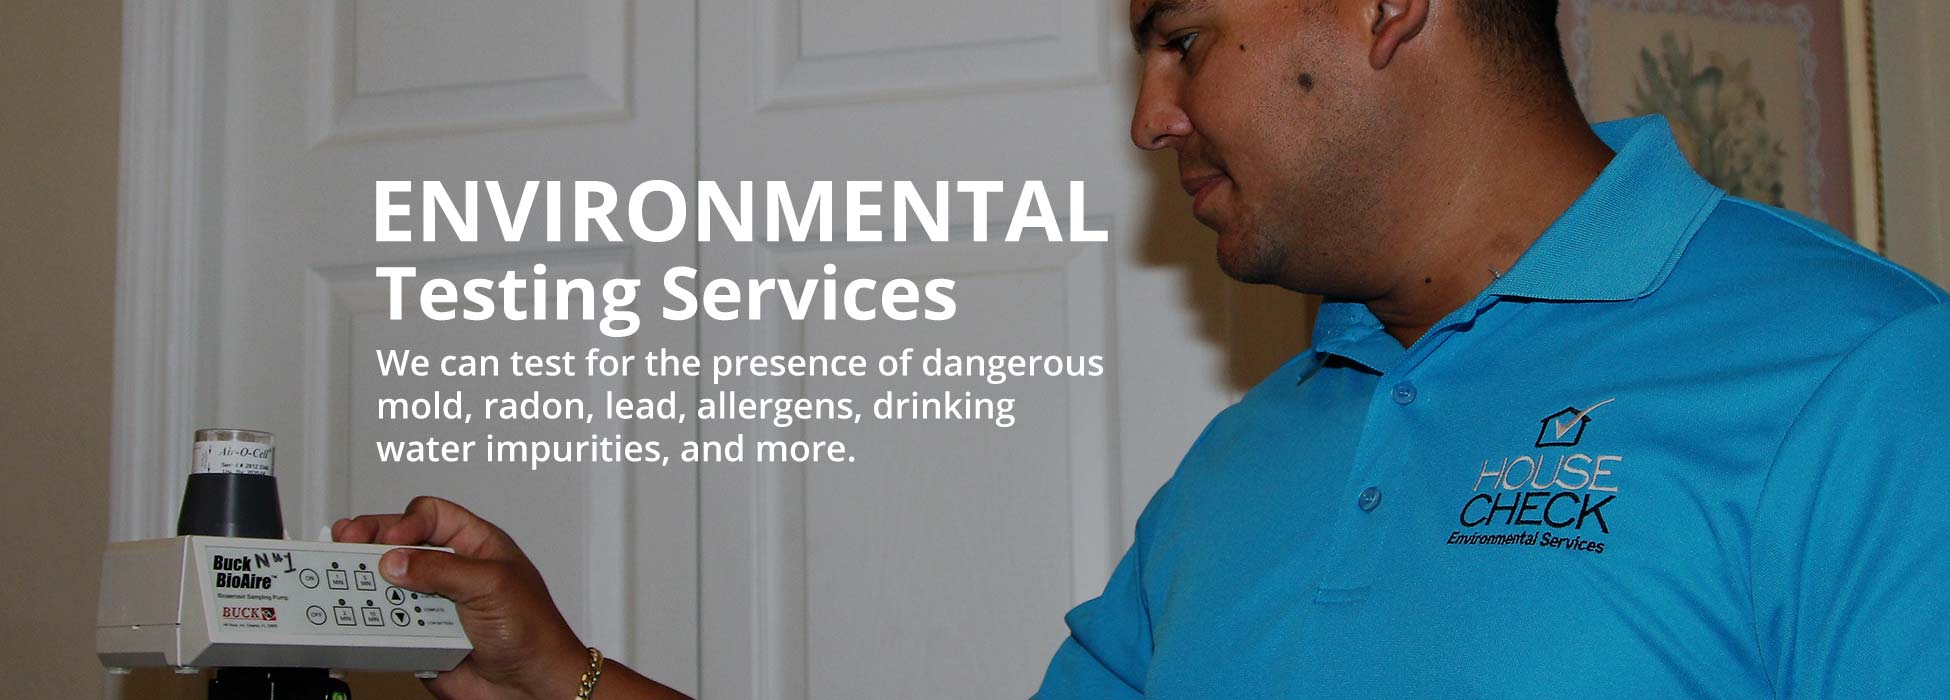 environmental testing services